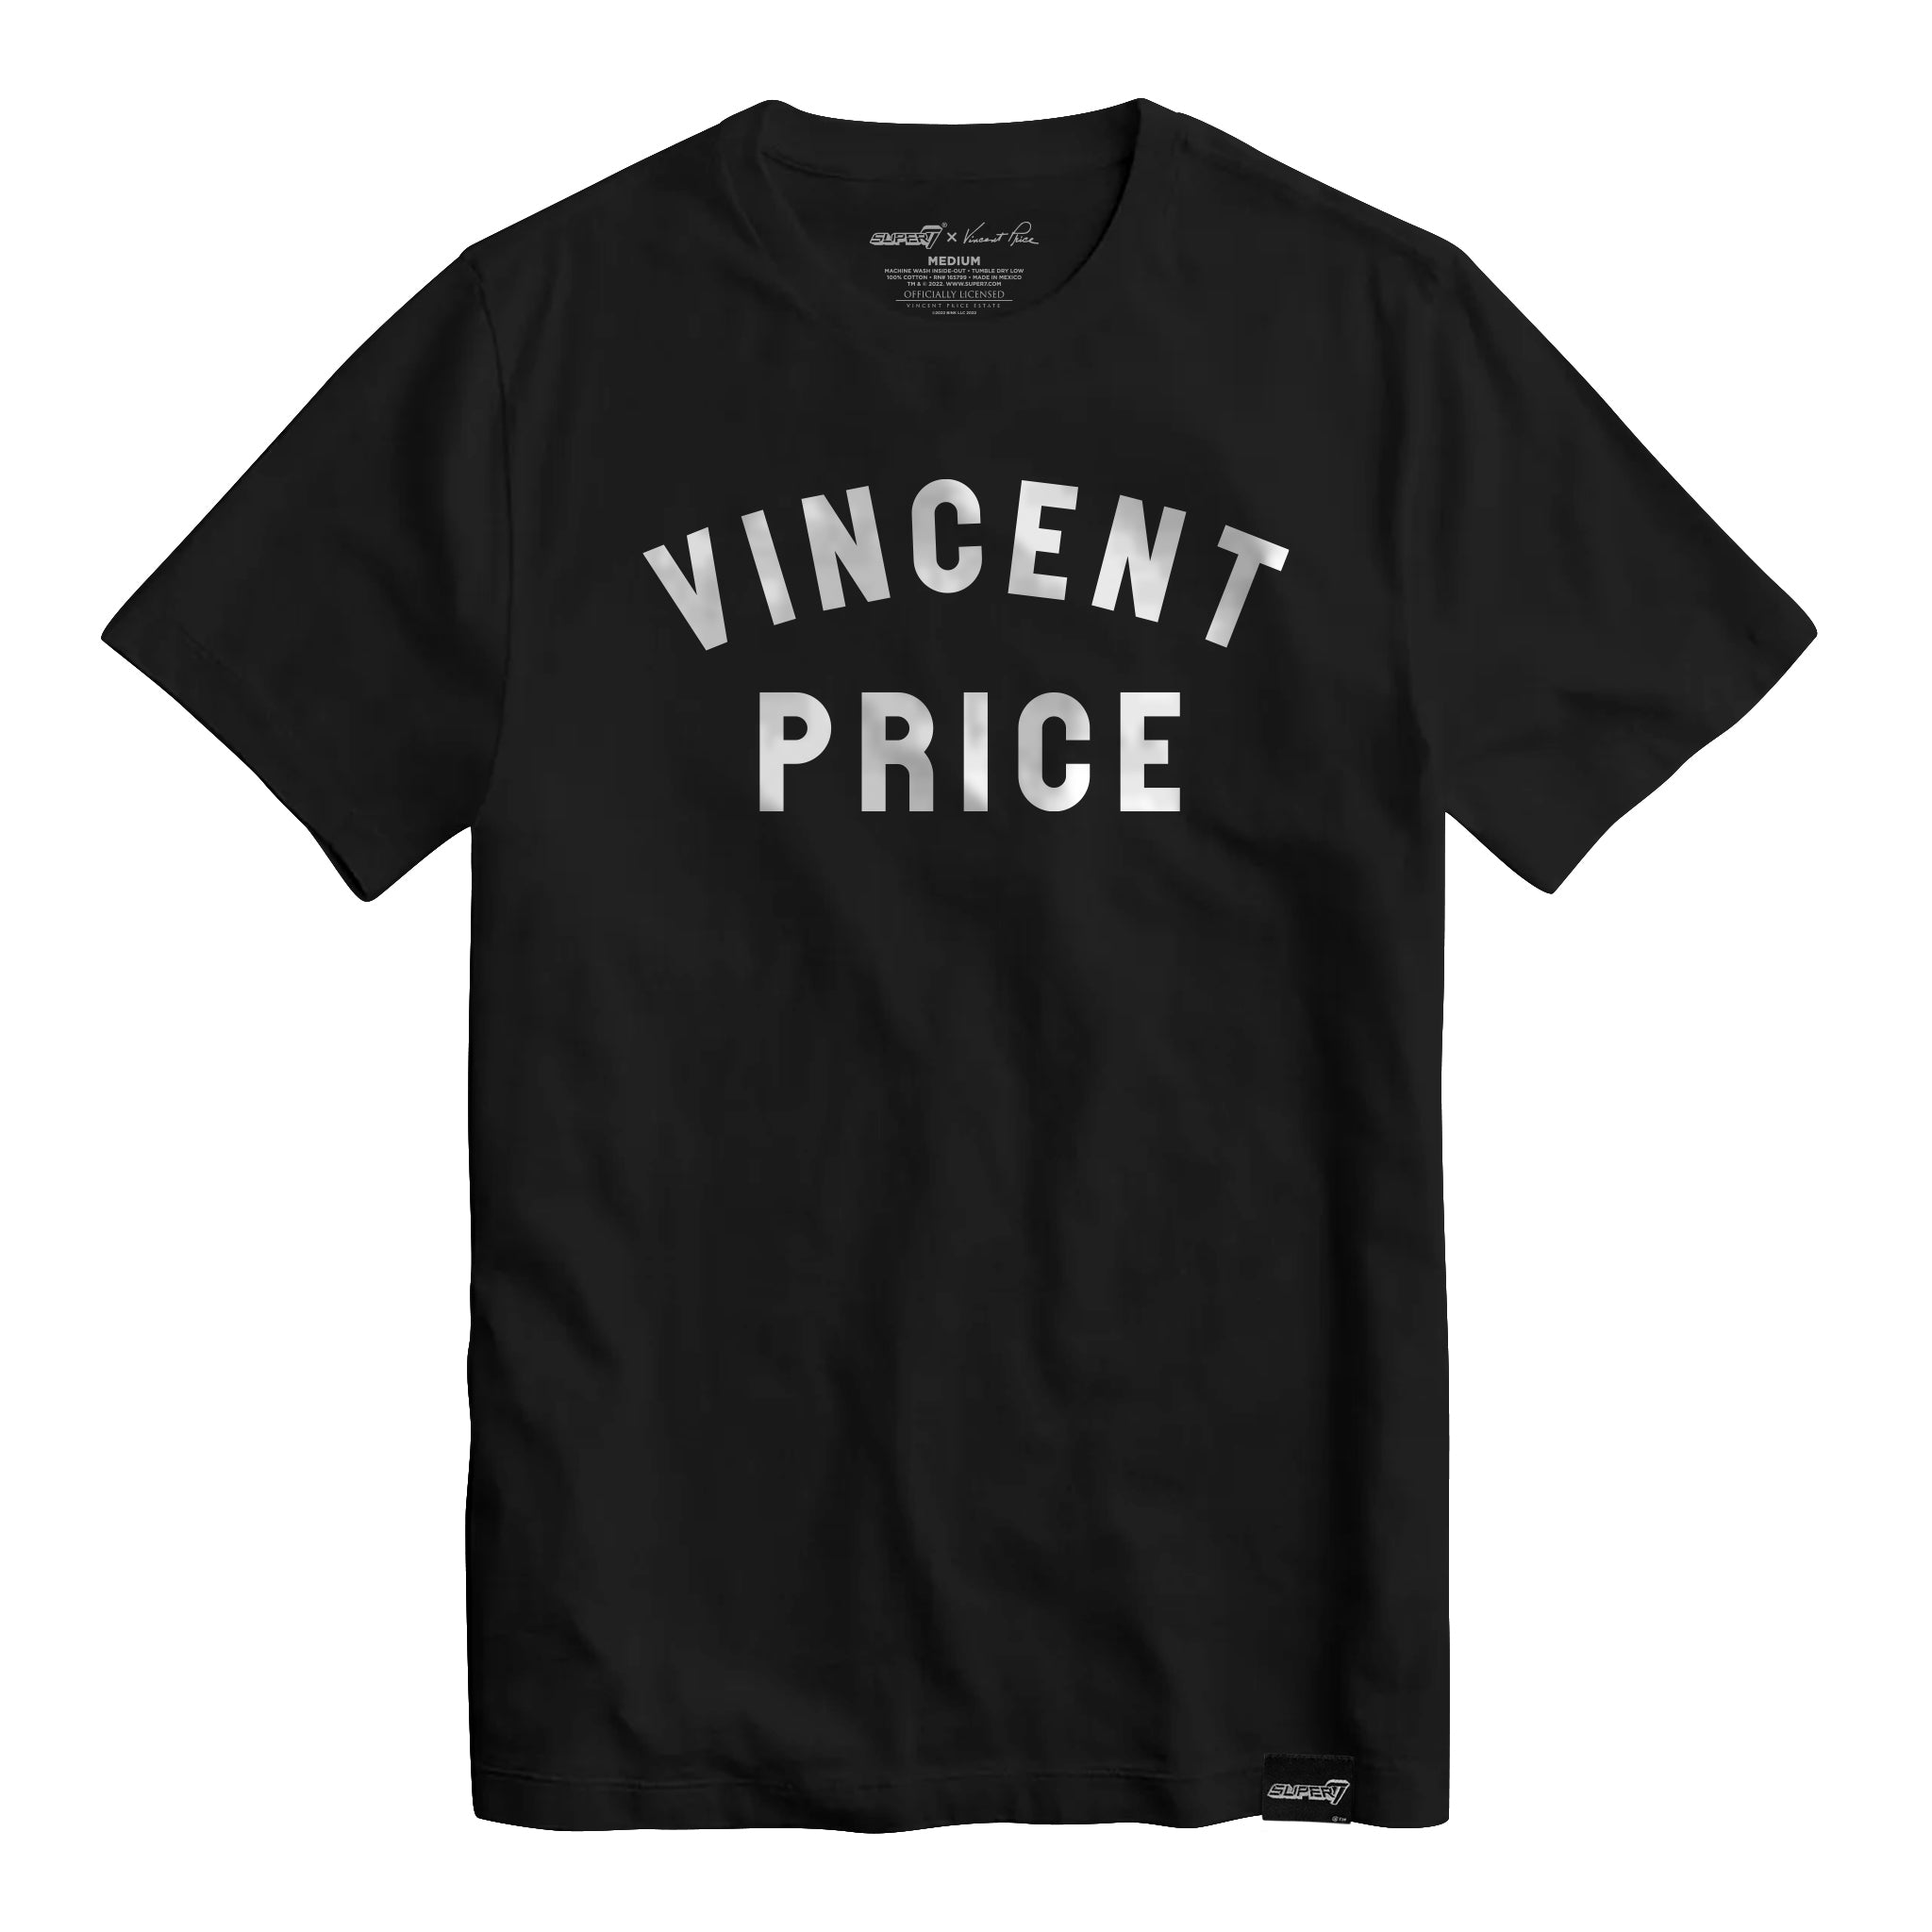 Vincent Price T-Shirt